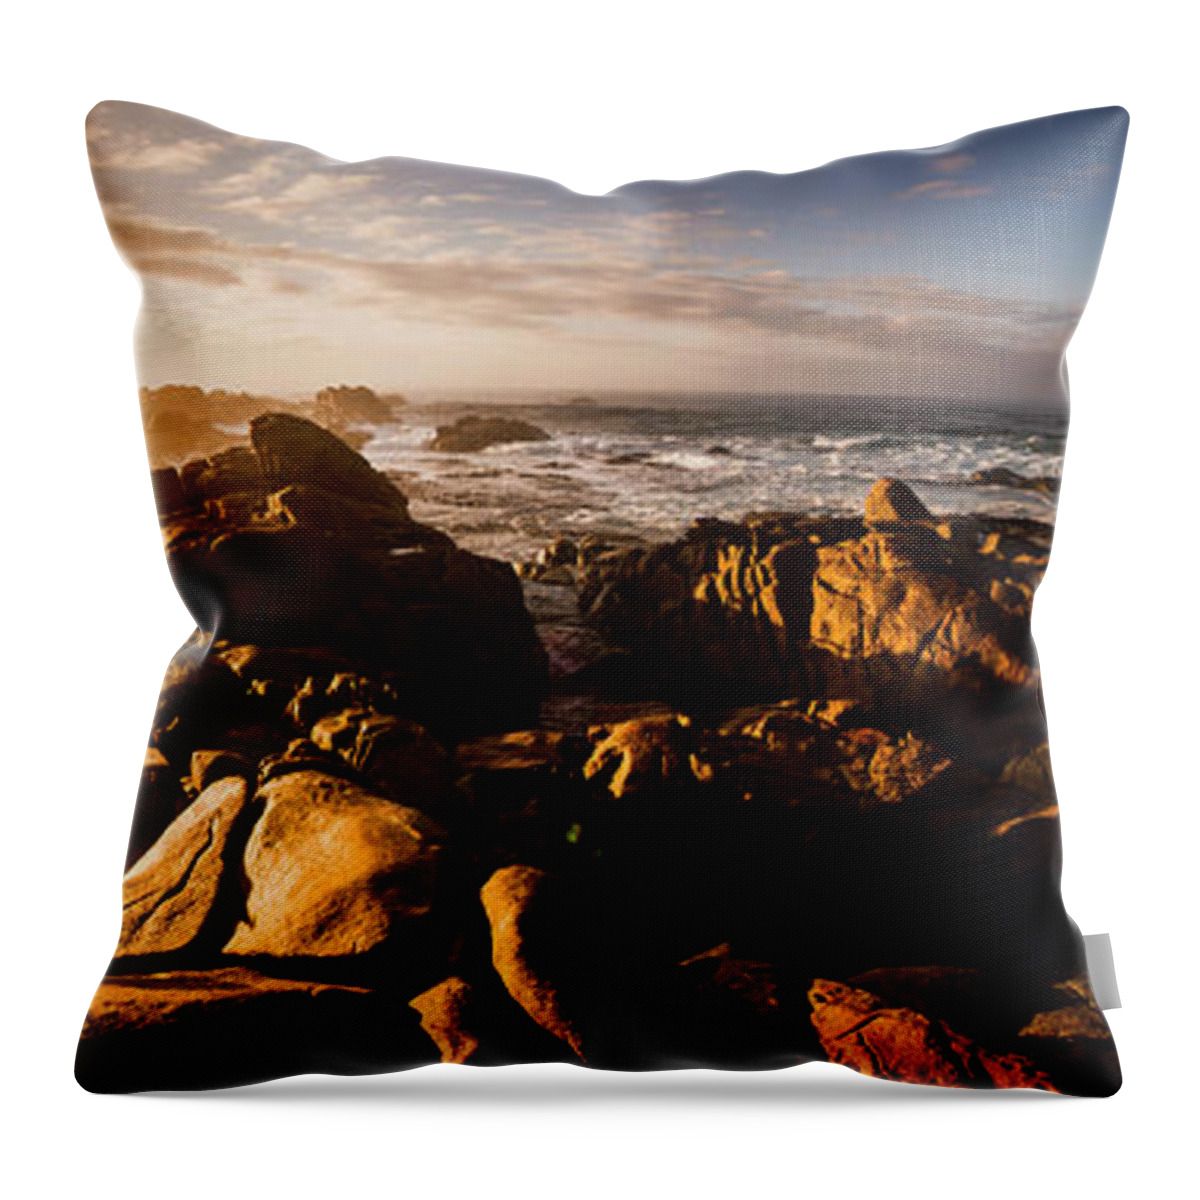 Australia Throw Pillow featuring the photograph Morning ocean panorama by Jorgo Photography